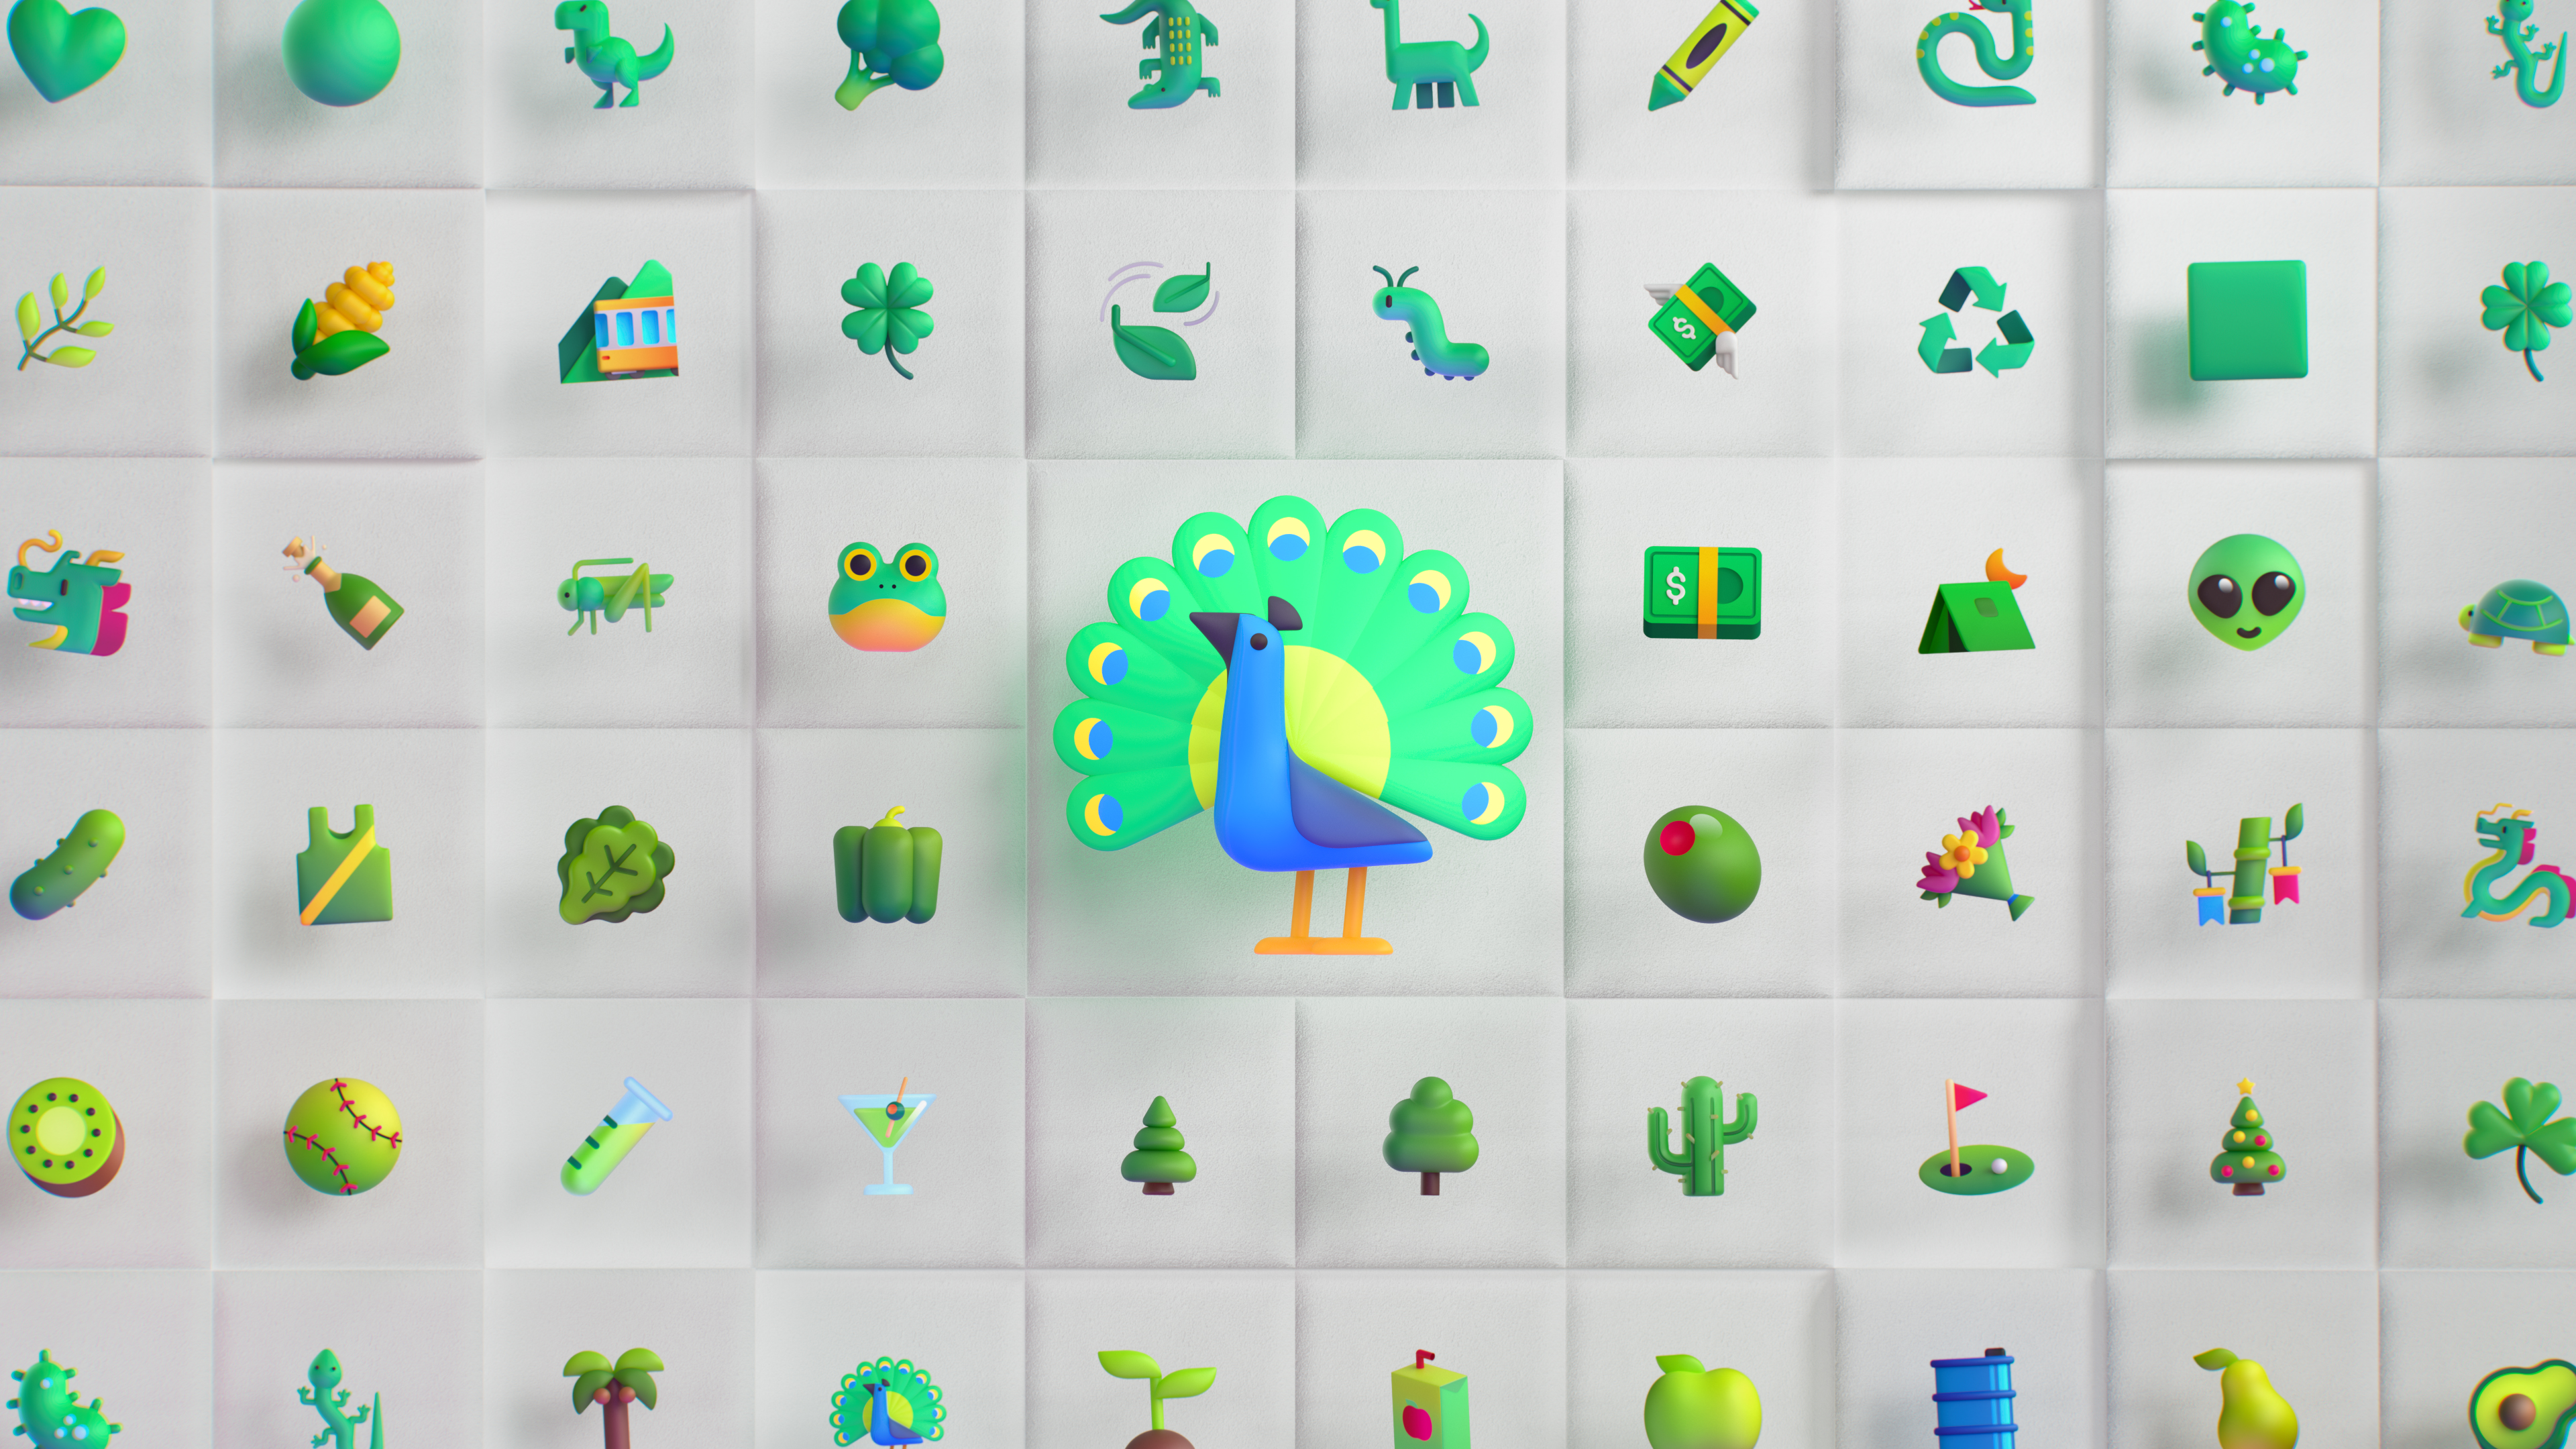 General 3840x2160 Emoji icons digital art tiles peacocks